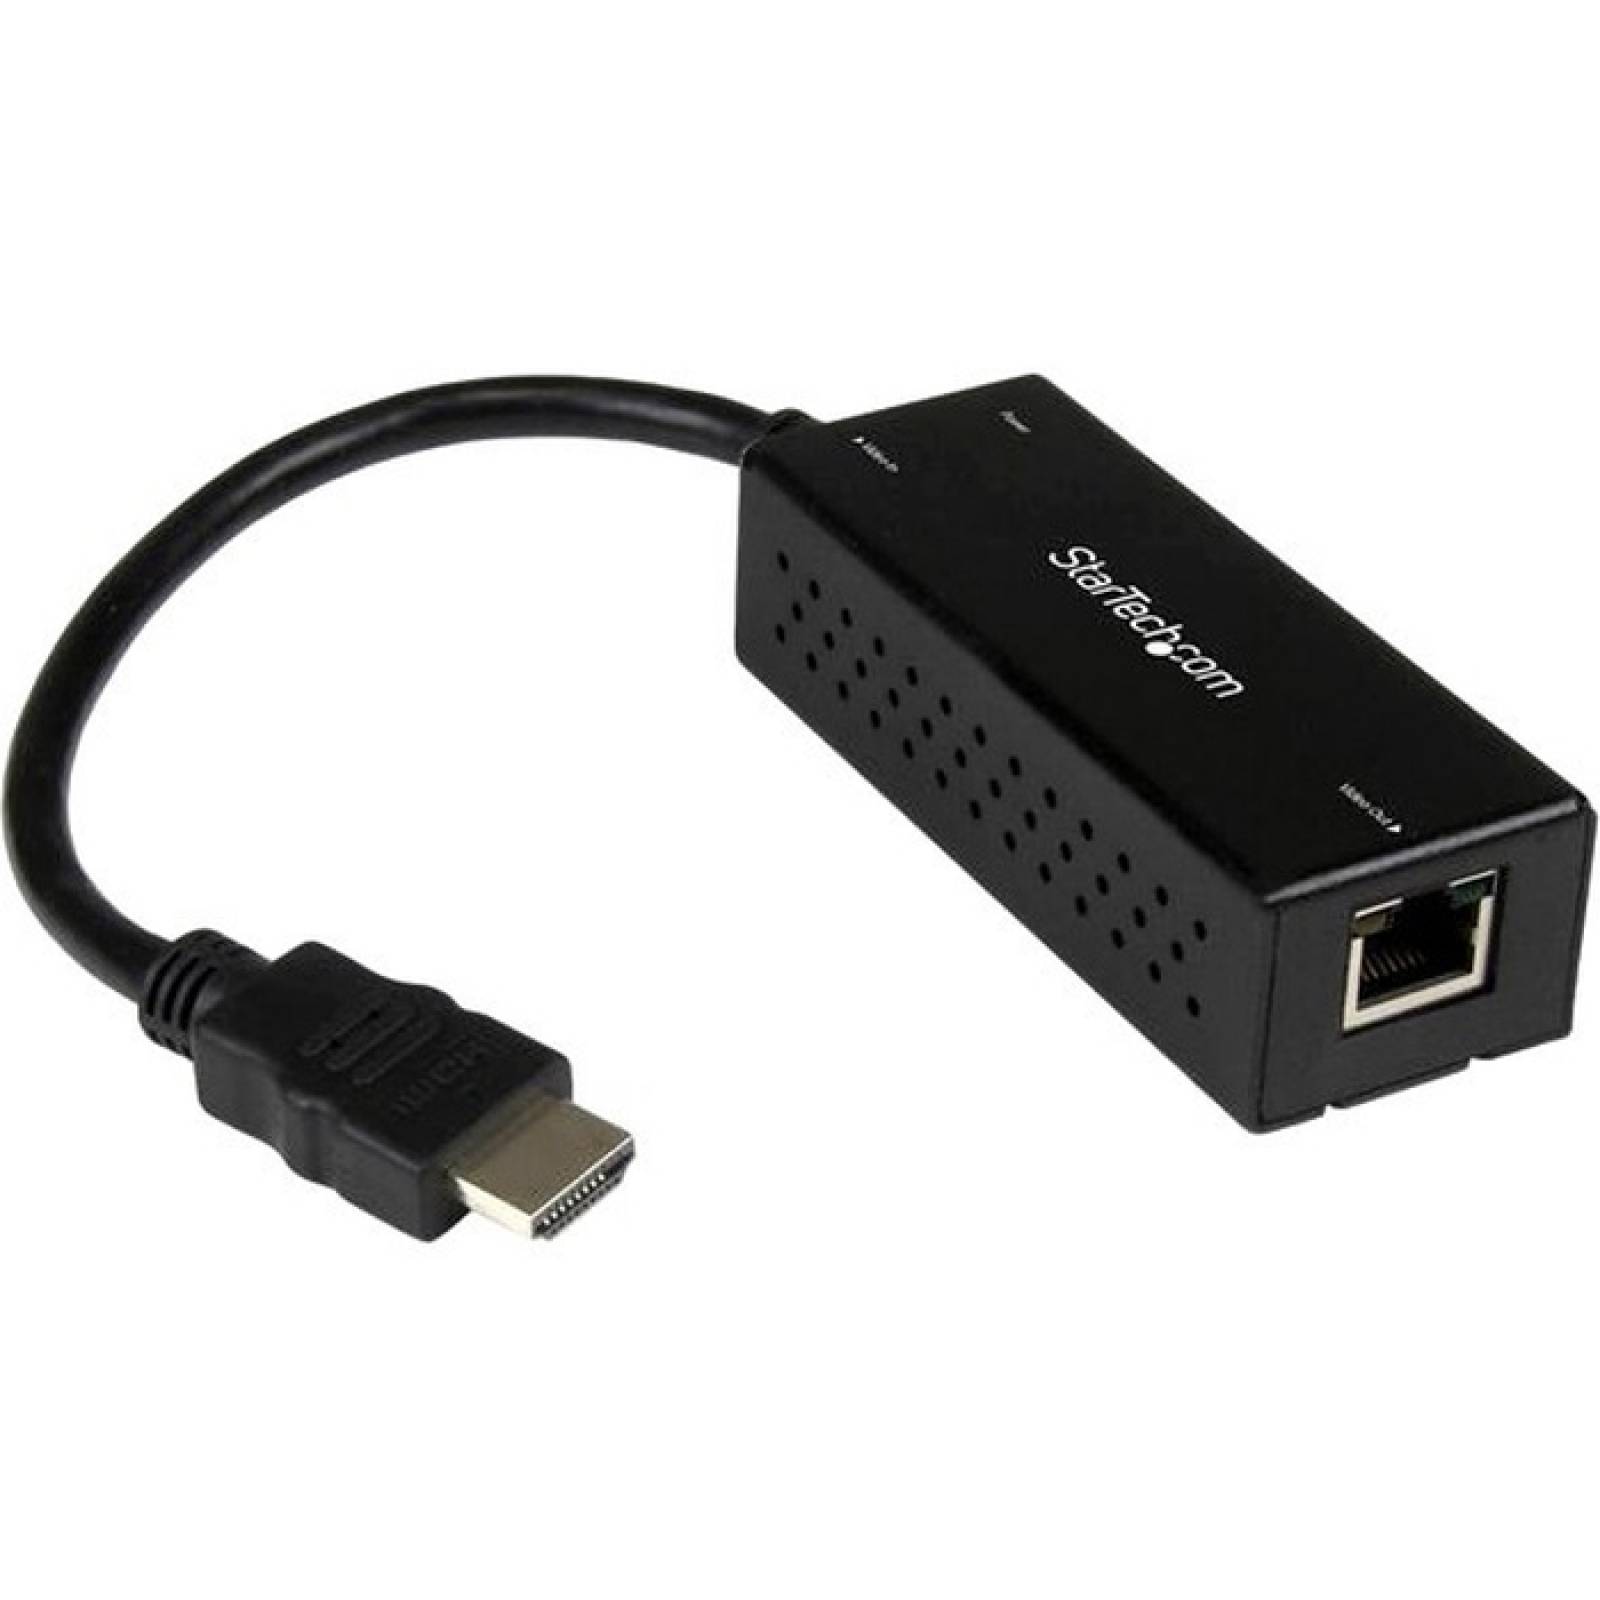 StarTechcom Transmisor HDBaseT compacto  HDMI a travs de CAT5  Conversor de HDMI a HDBaseT  Alimentado por USB  Ha